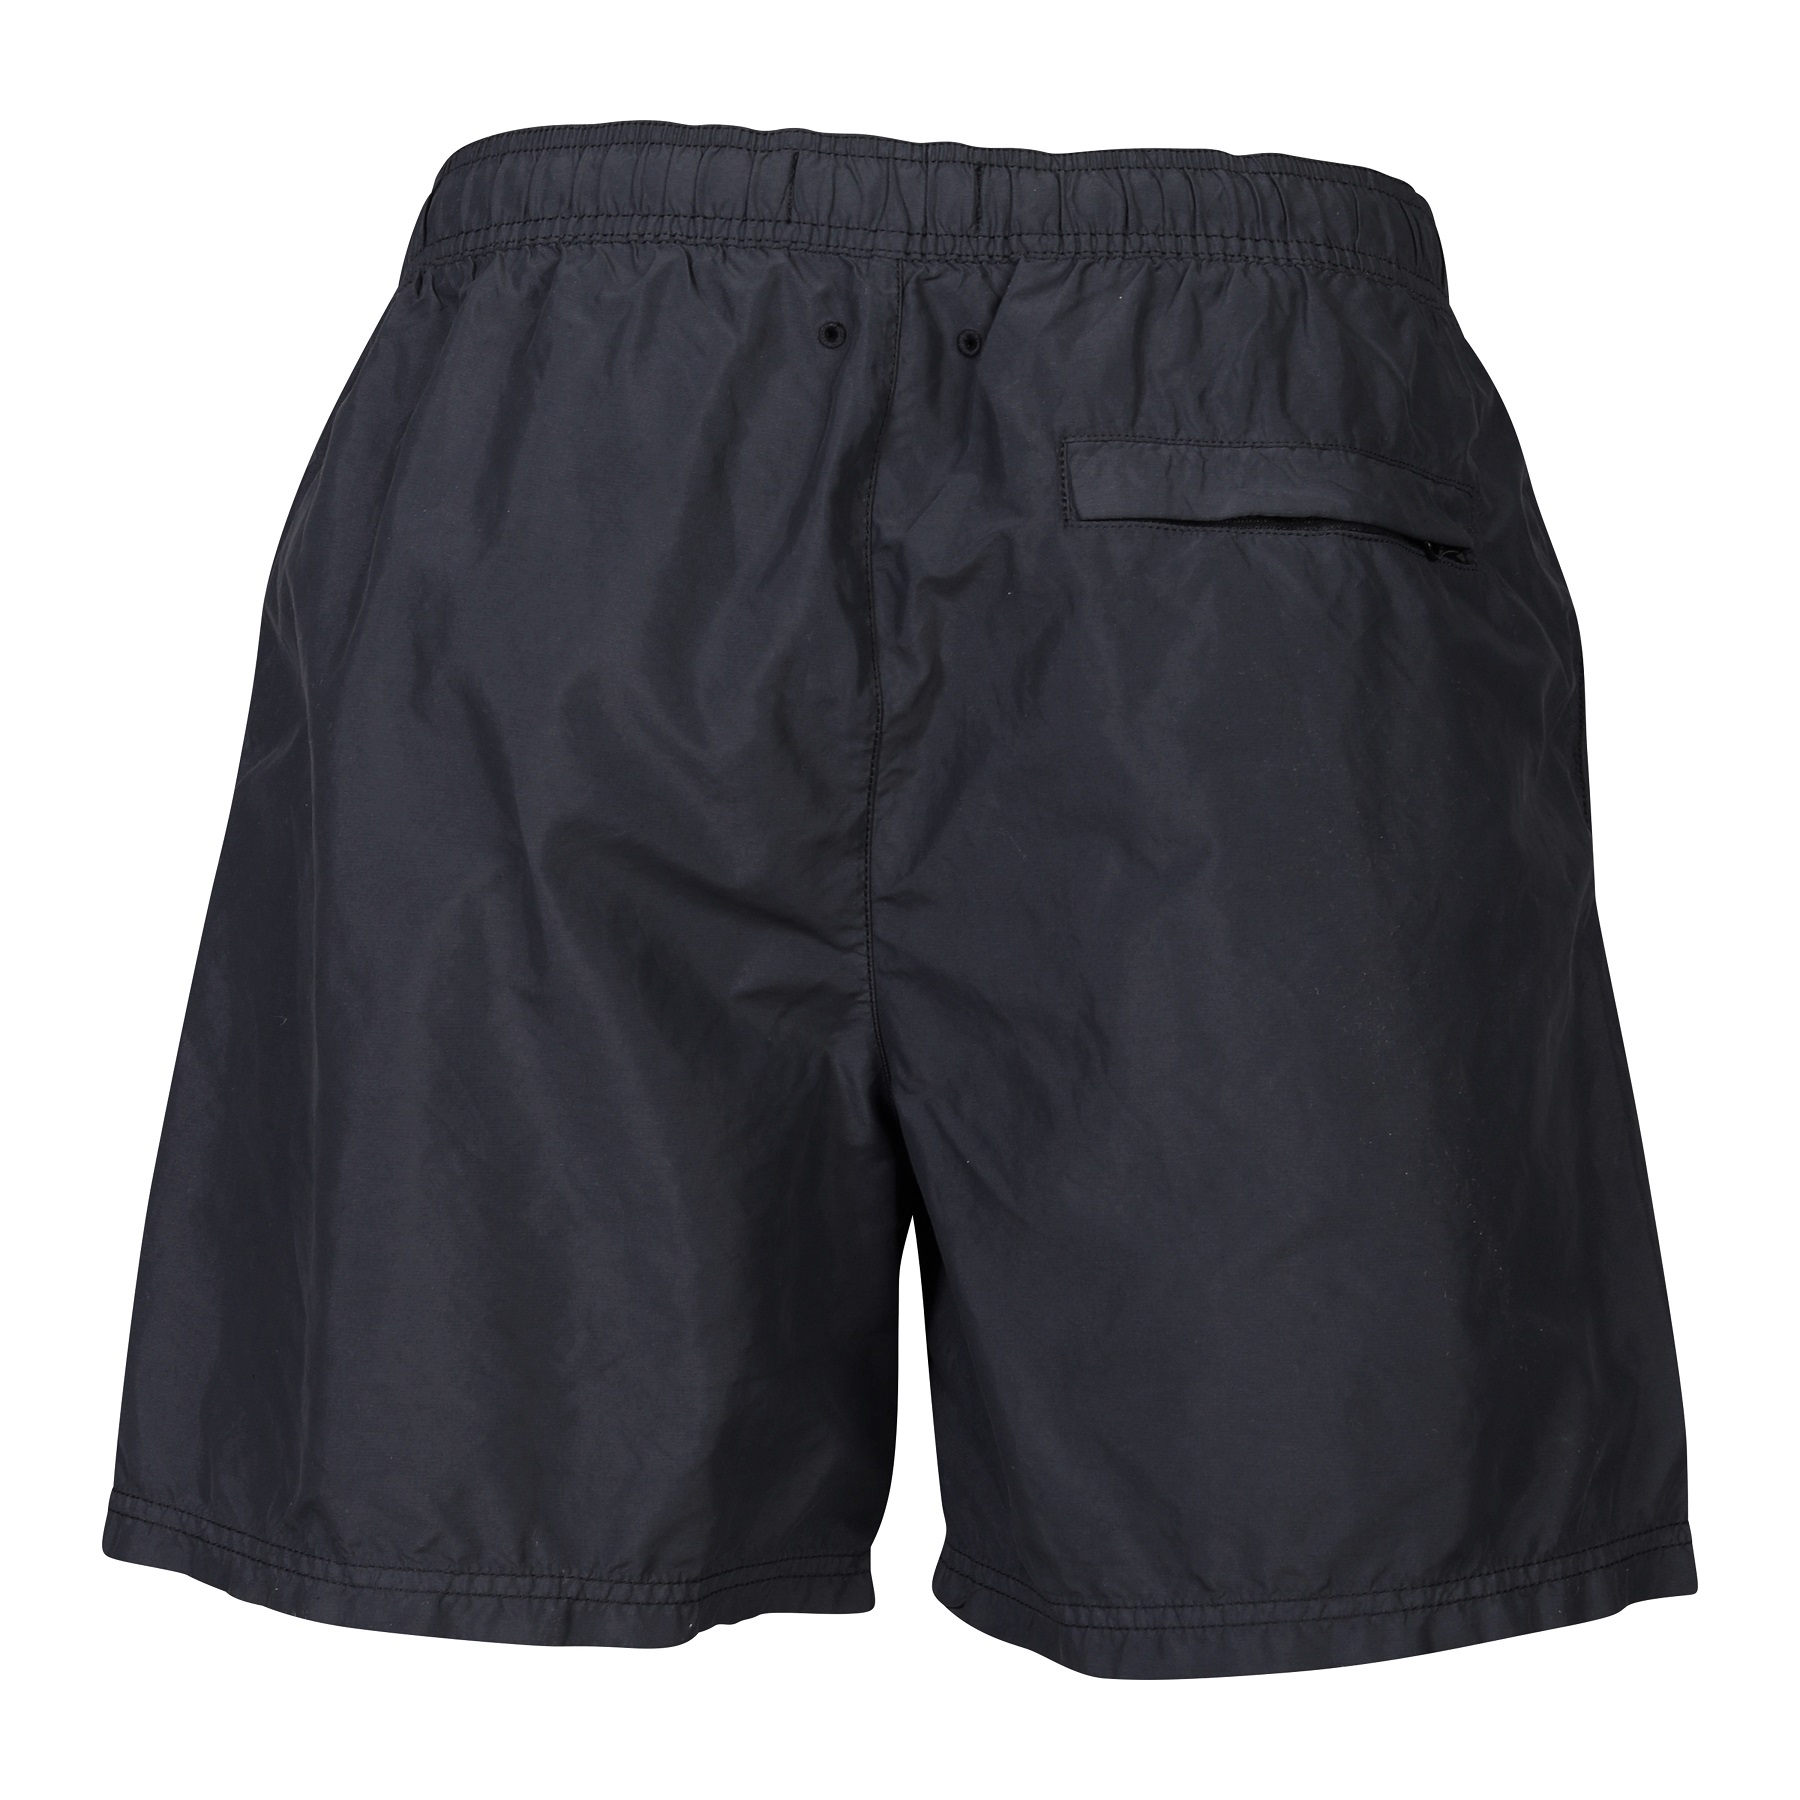 STONE ISLAND Swim Shorts in Black L